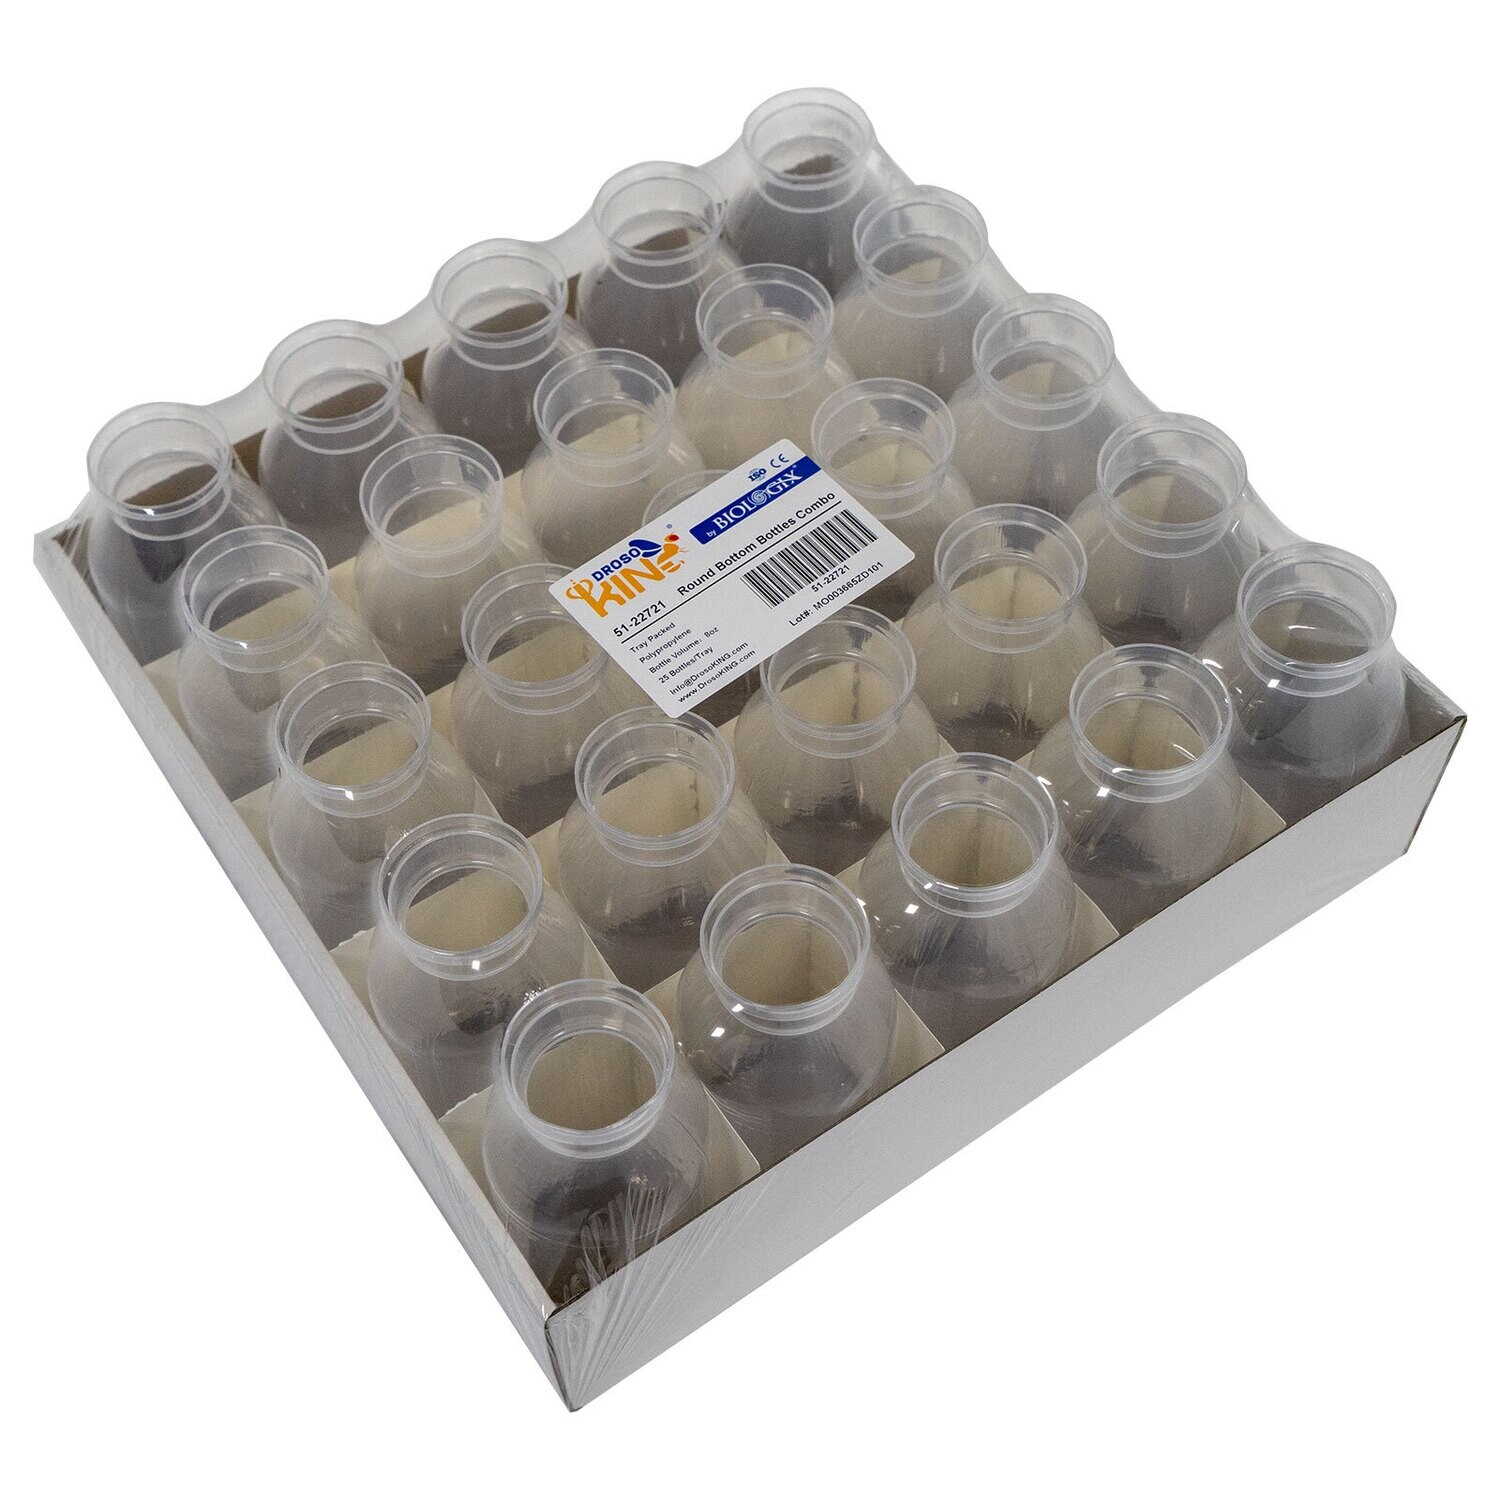 Drosophila Bottles, 8oz (227ml), Round Bottom, Bulk/Tray Package, 100 Pcs/Case